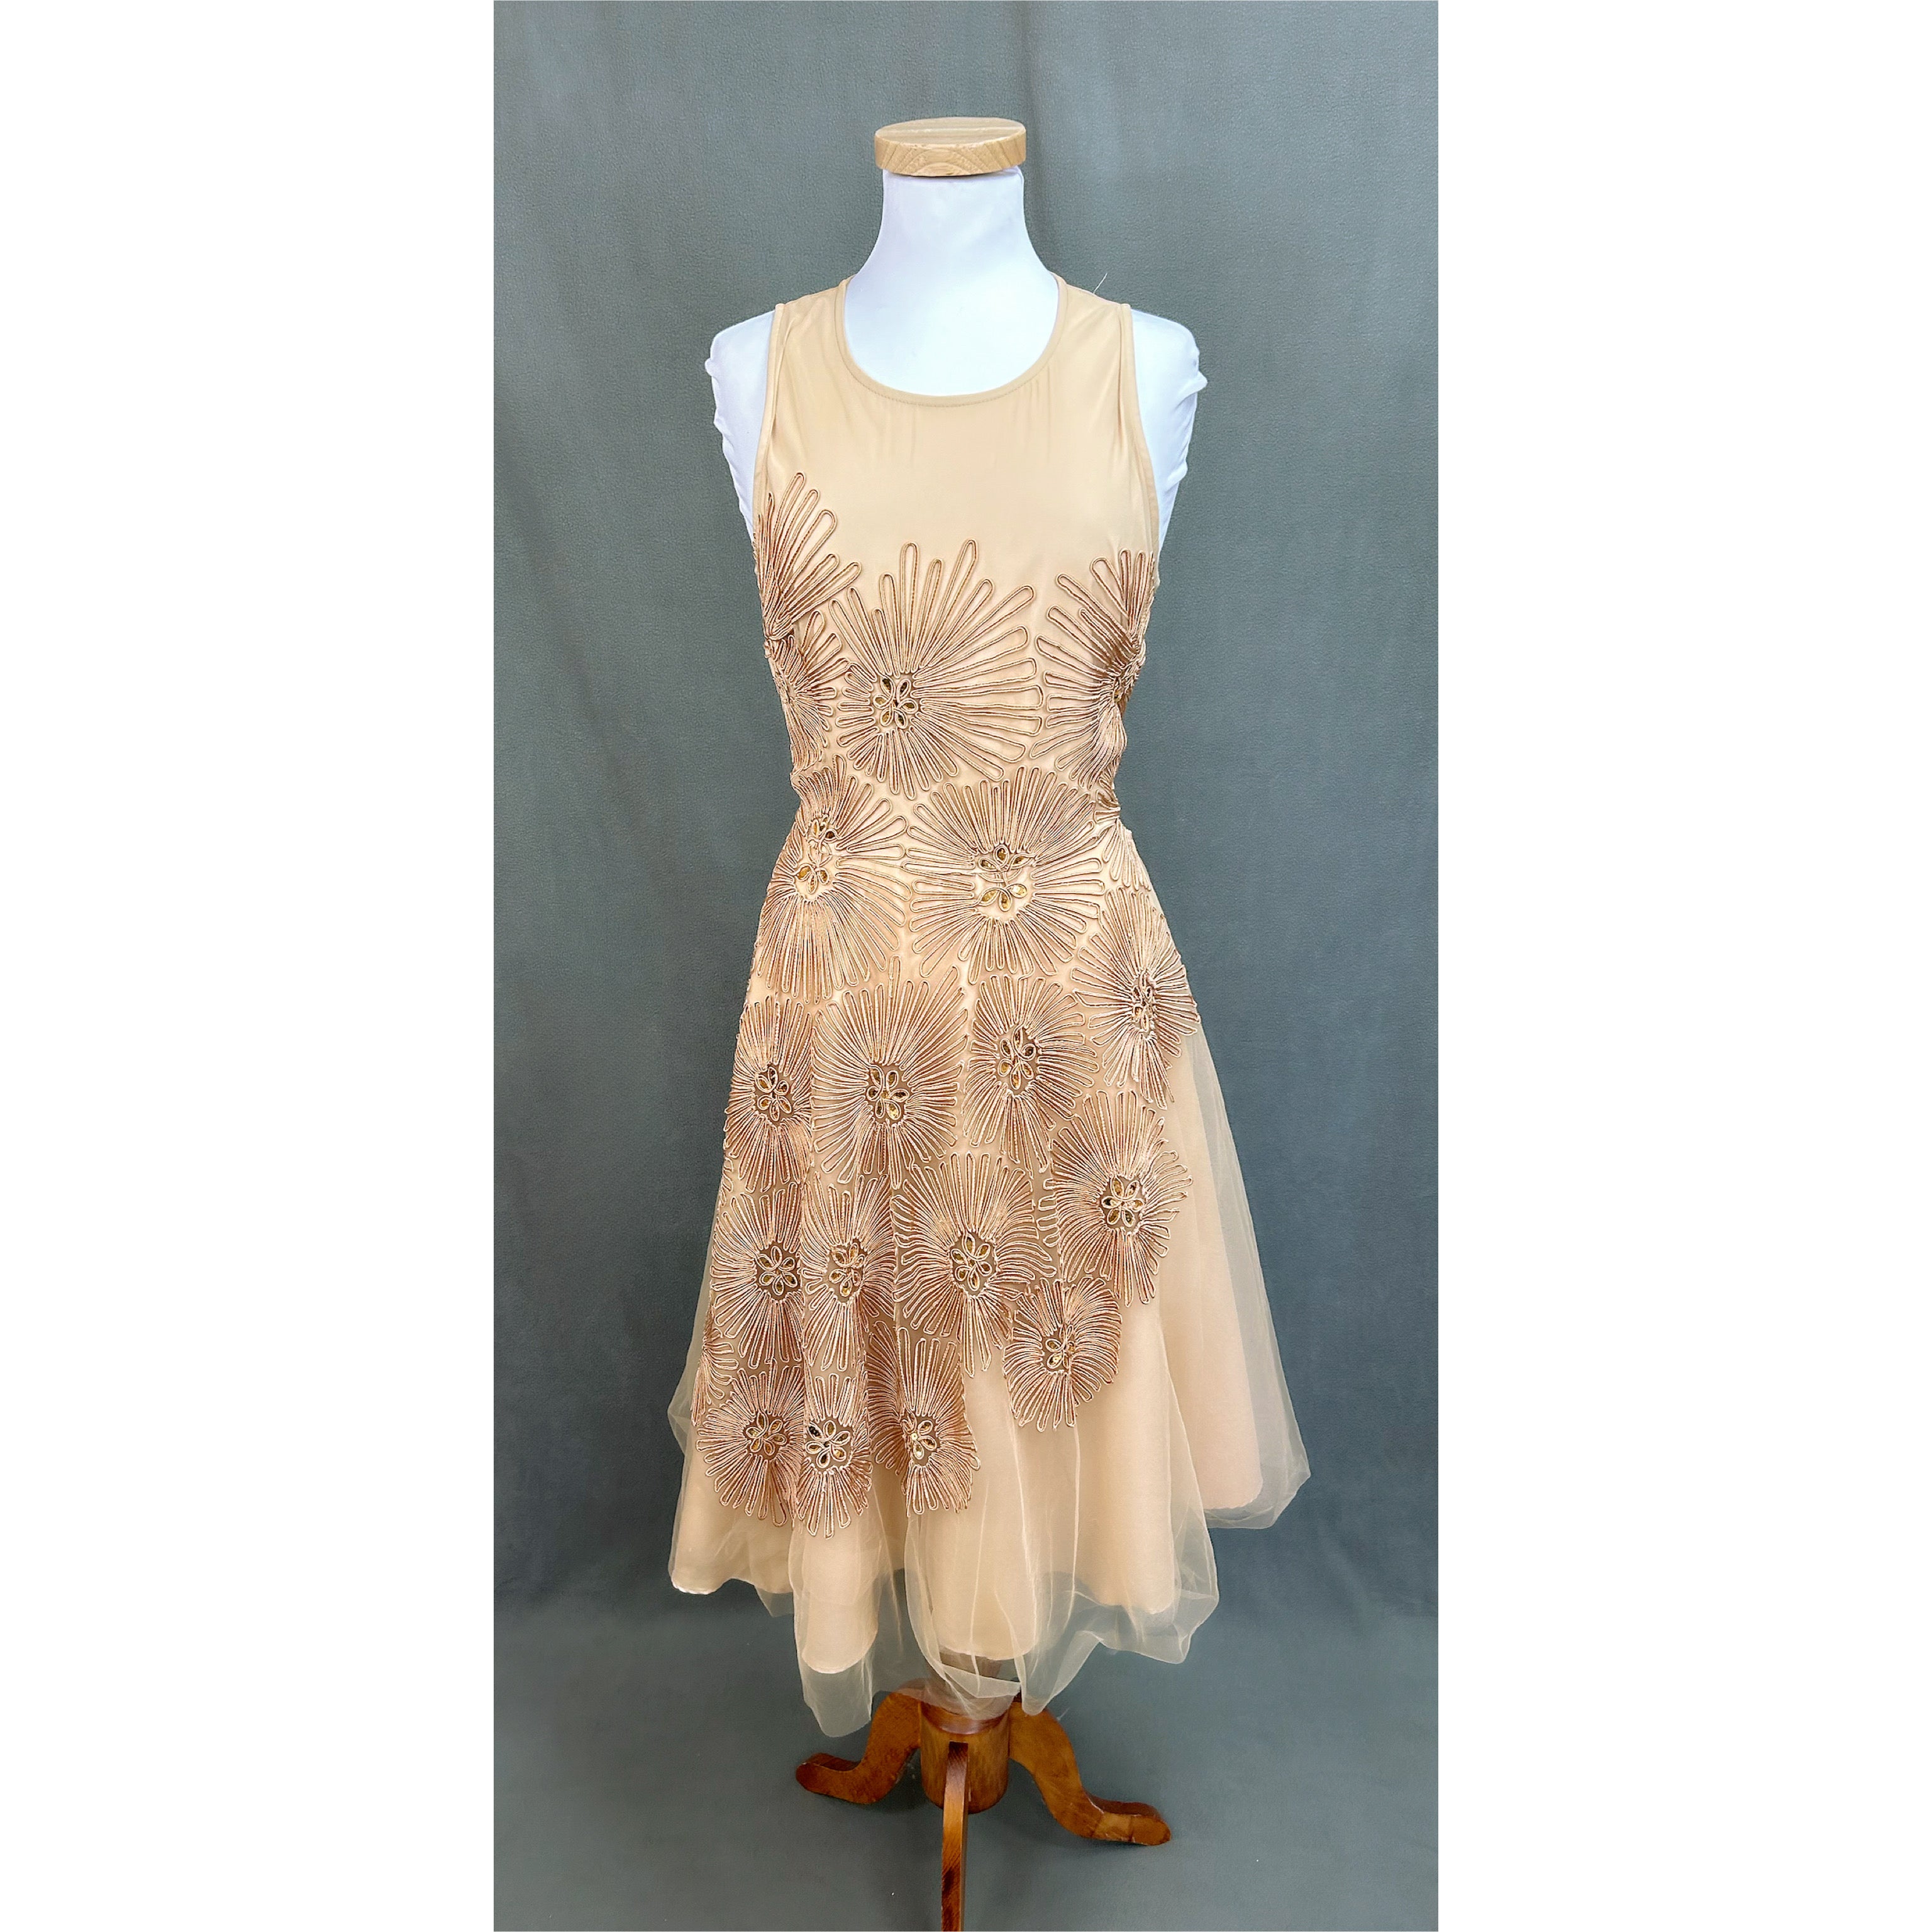 Belle Badgley Mischka champagne dress, size 12